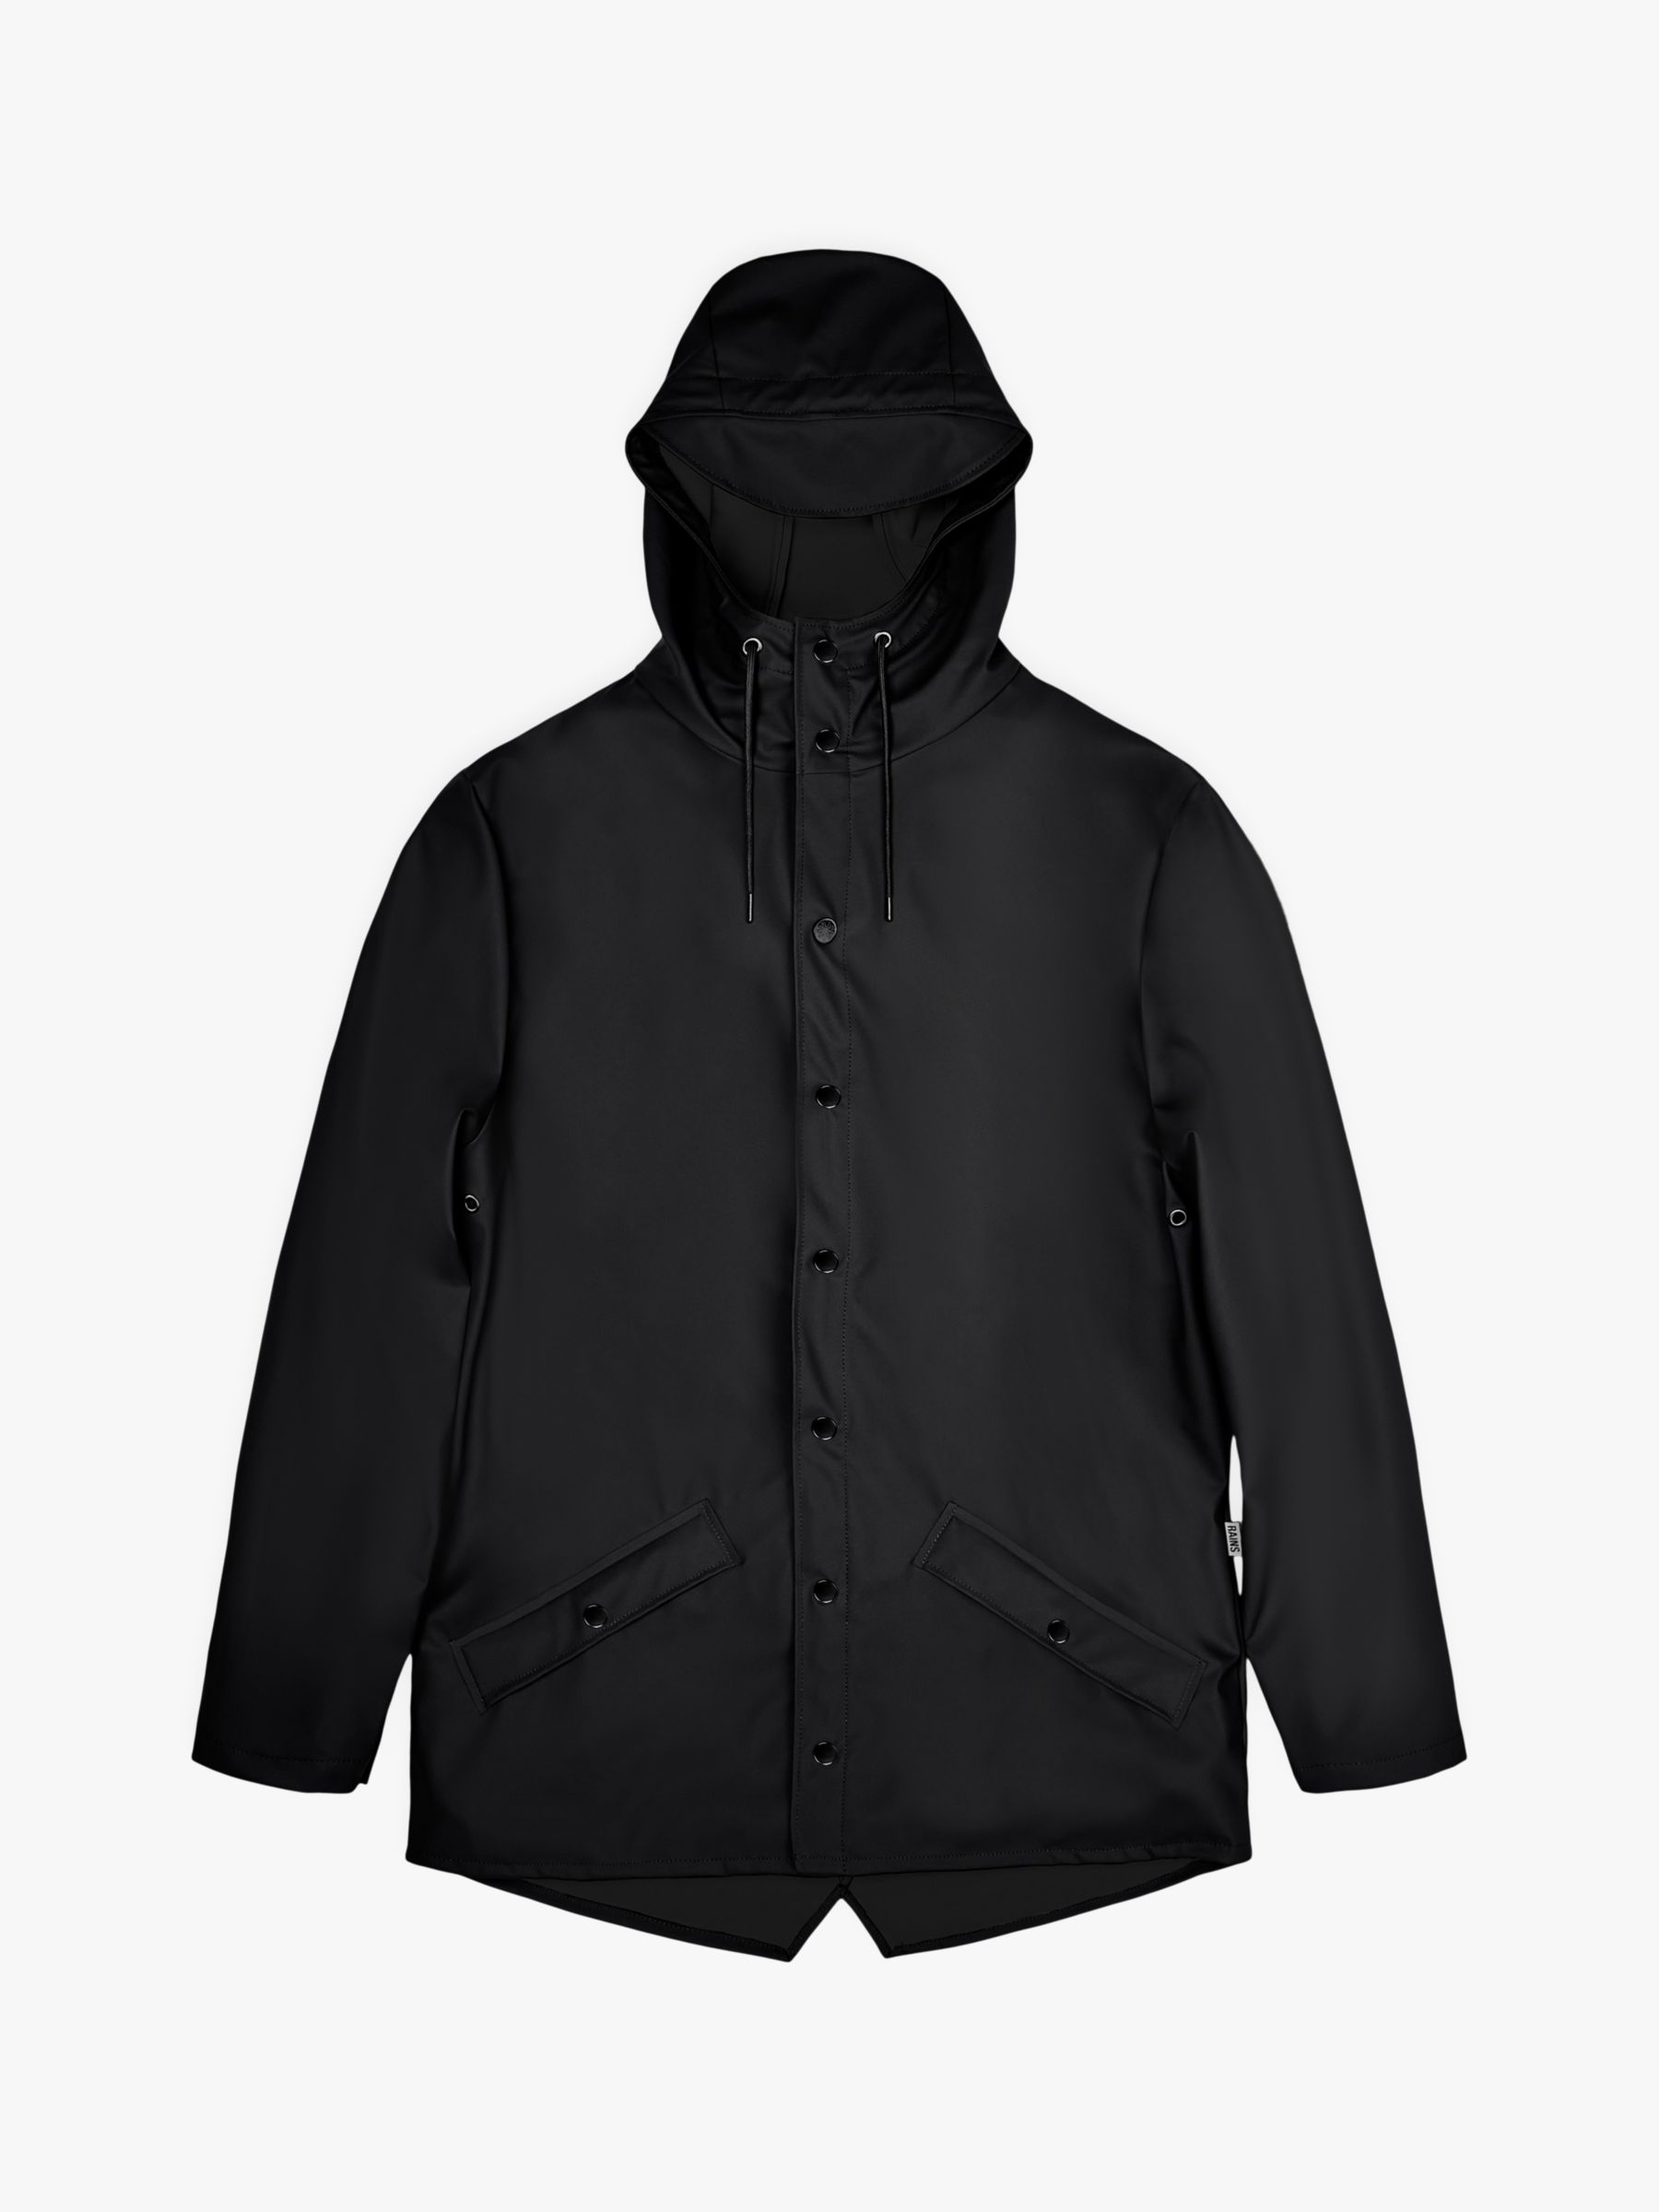 Rains Unisex Waterproof Rain Jacket, 01 Black, XL